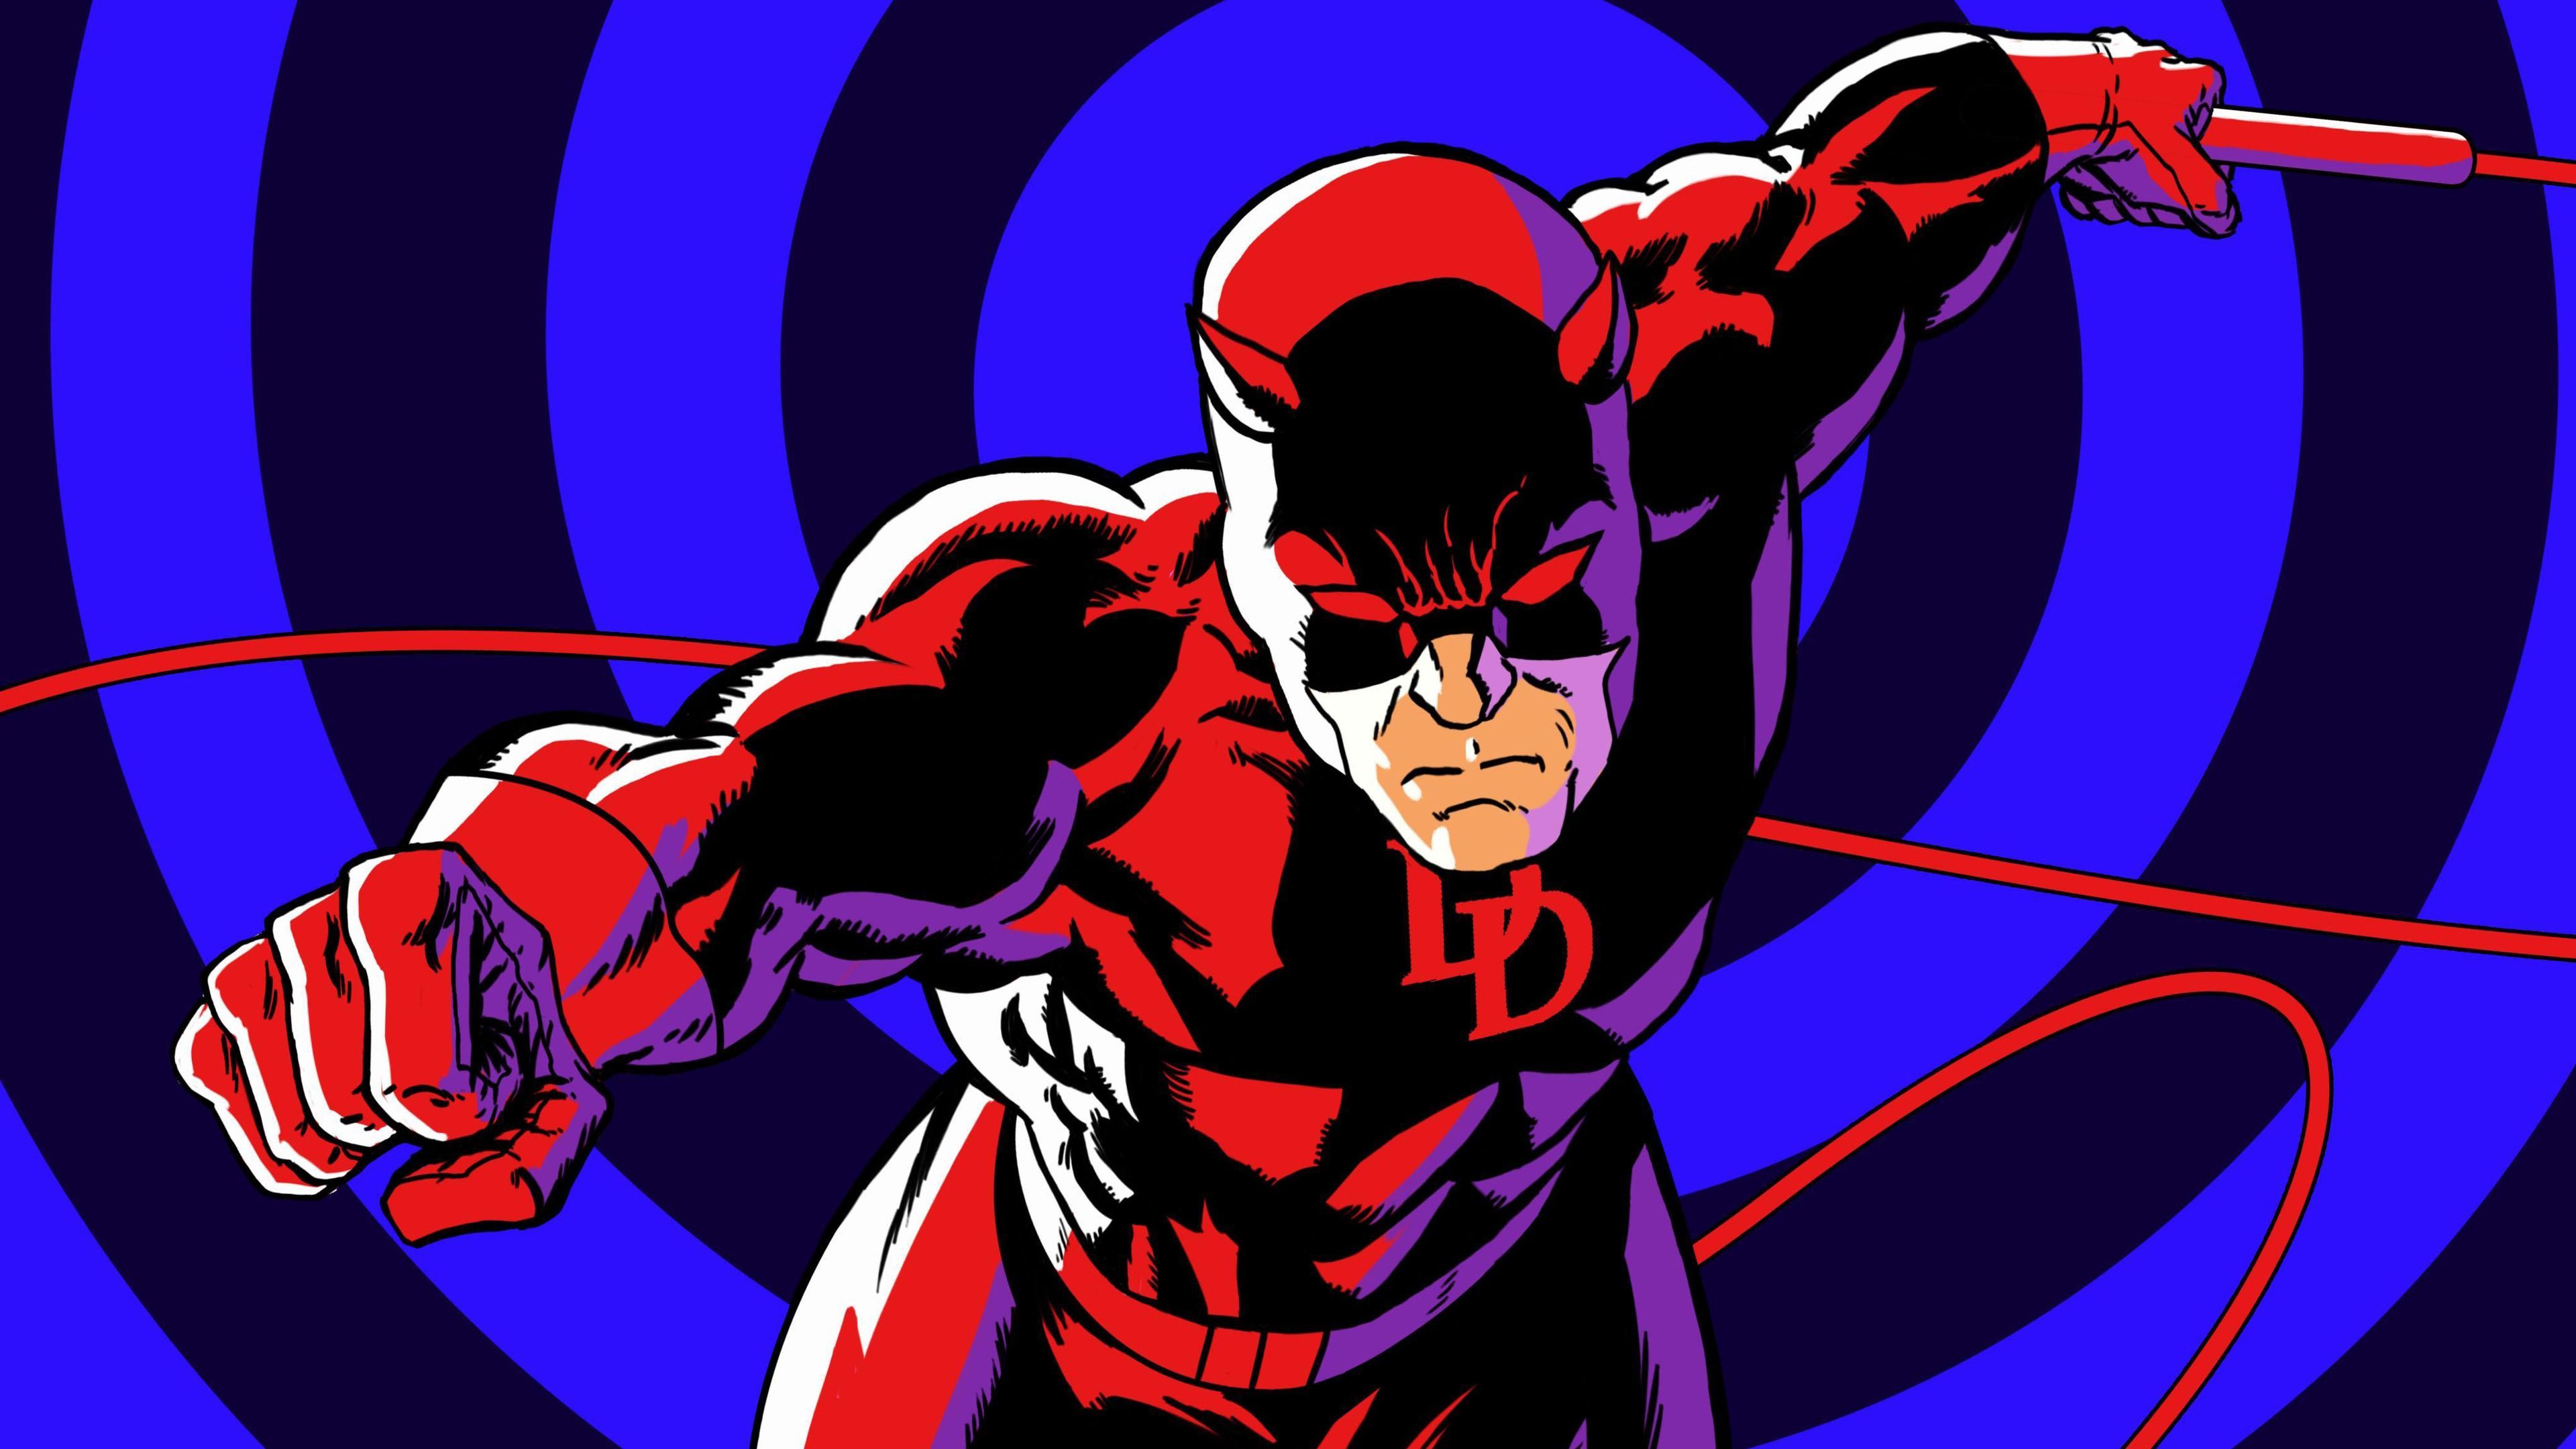 Daredevil Artworks 4k Superheroes Wallpaper, Hd Wallpaper, Daredevil Wallpaper, Artwork Wallpaper, 5k Wallpaper. Daredevil Artwork, Daredevil Comic, Daredevil